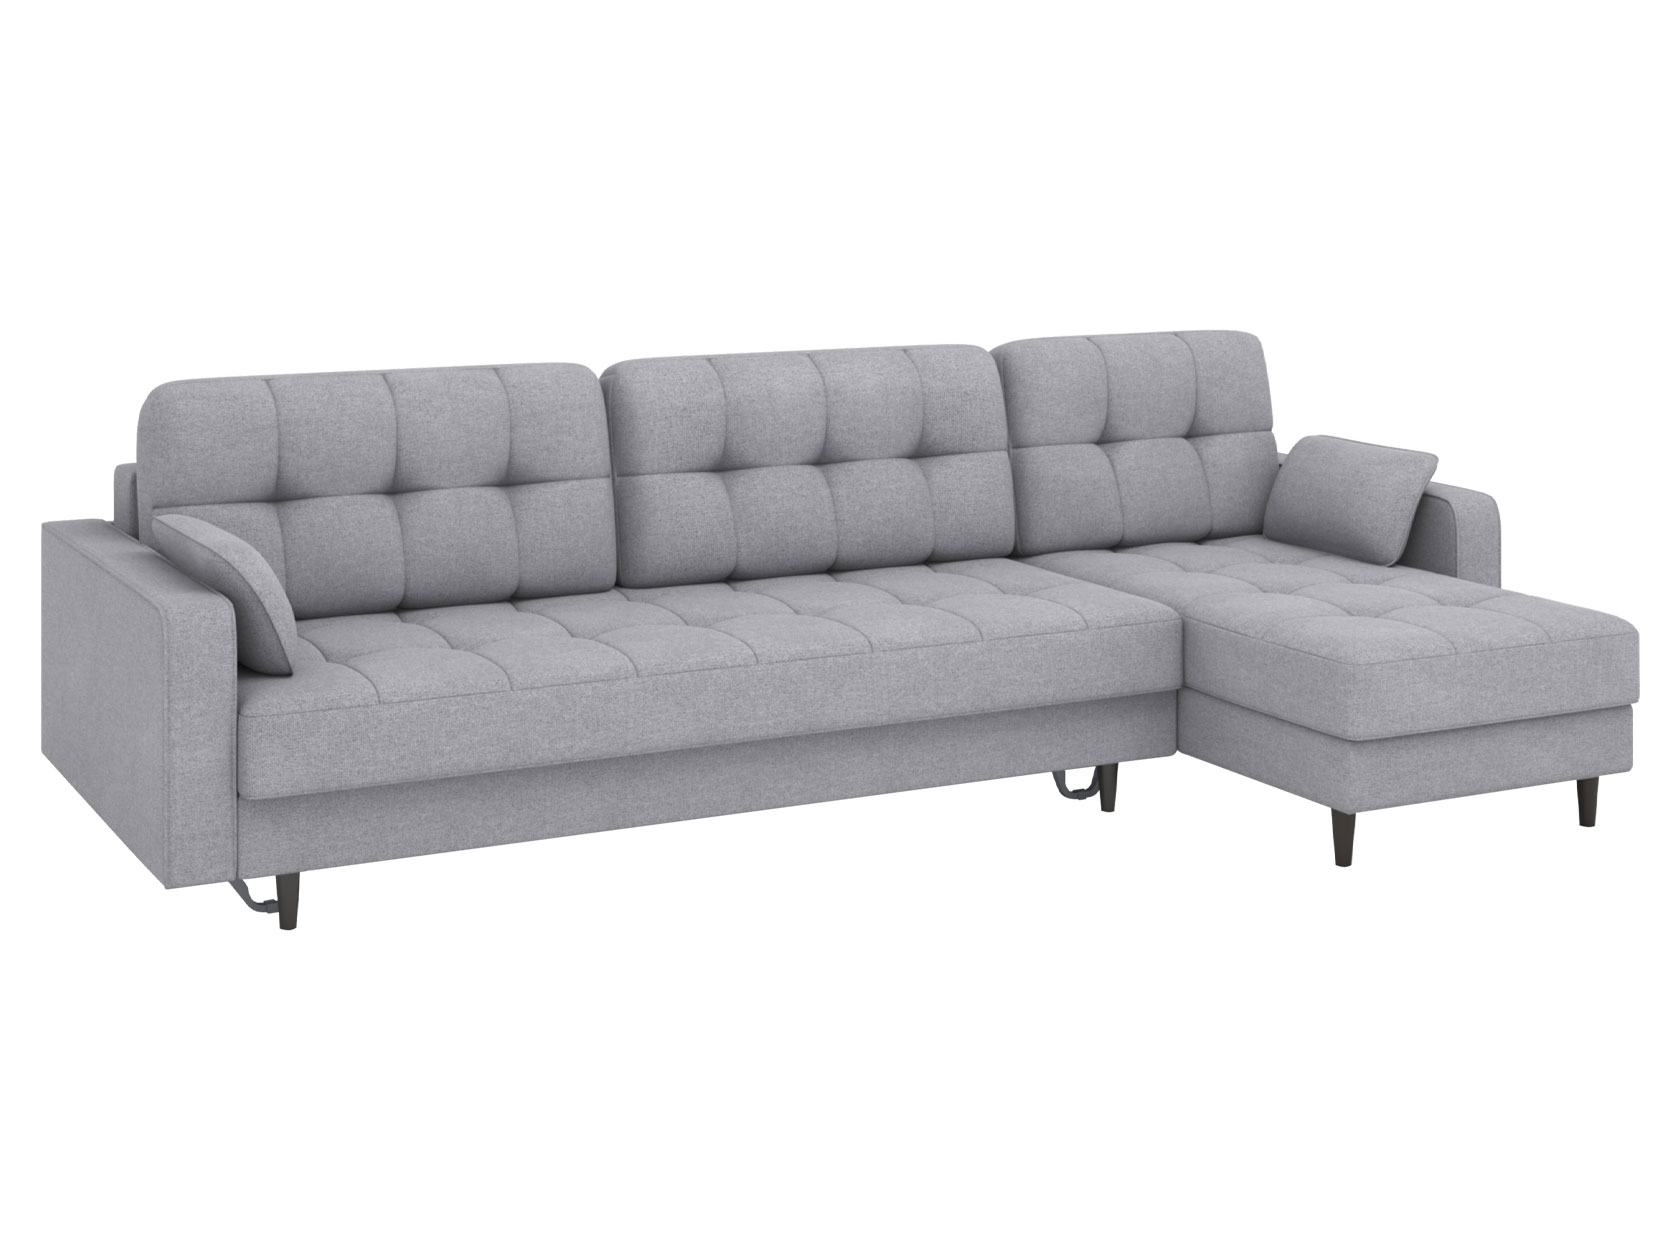 Угловой диван с оттоманкой Диван Санфорд с оттоманкой макси Санфорд Макси фото 1